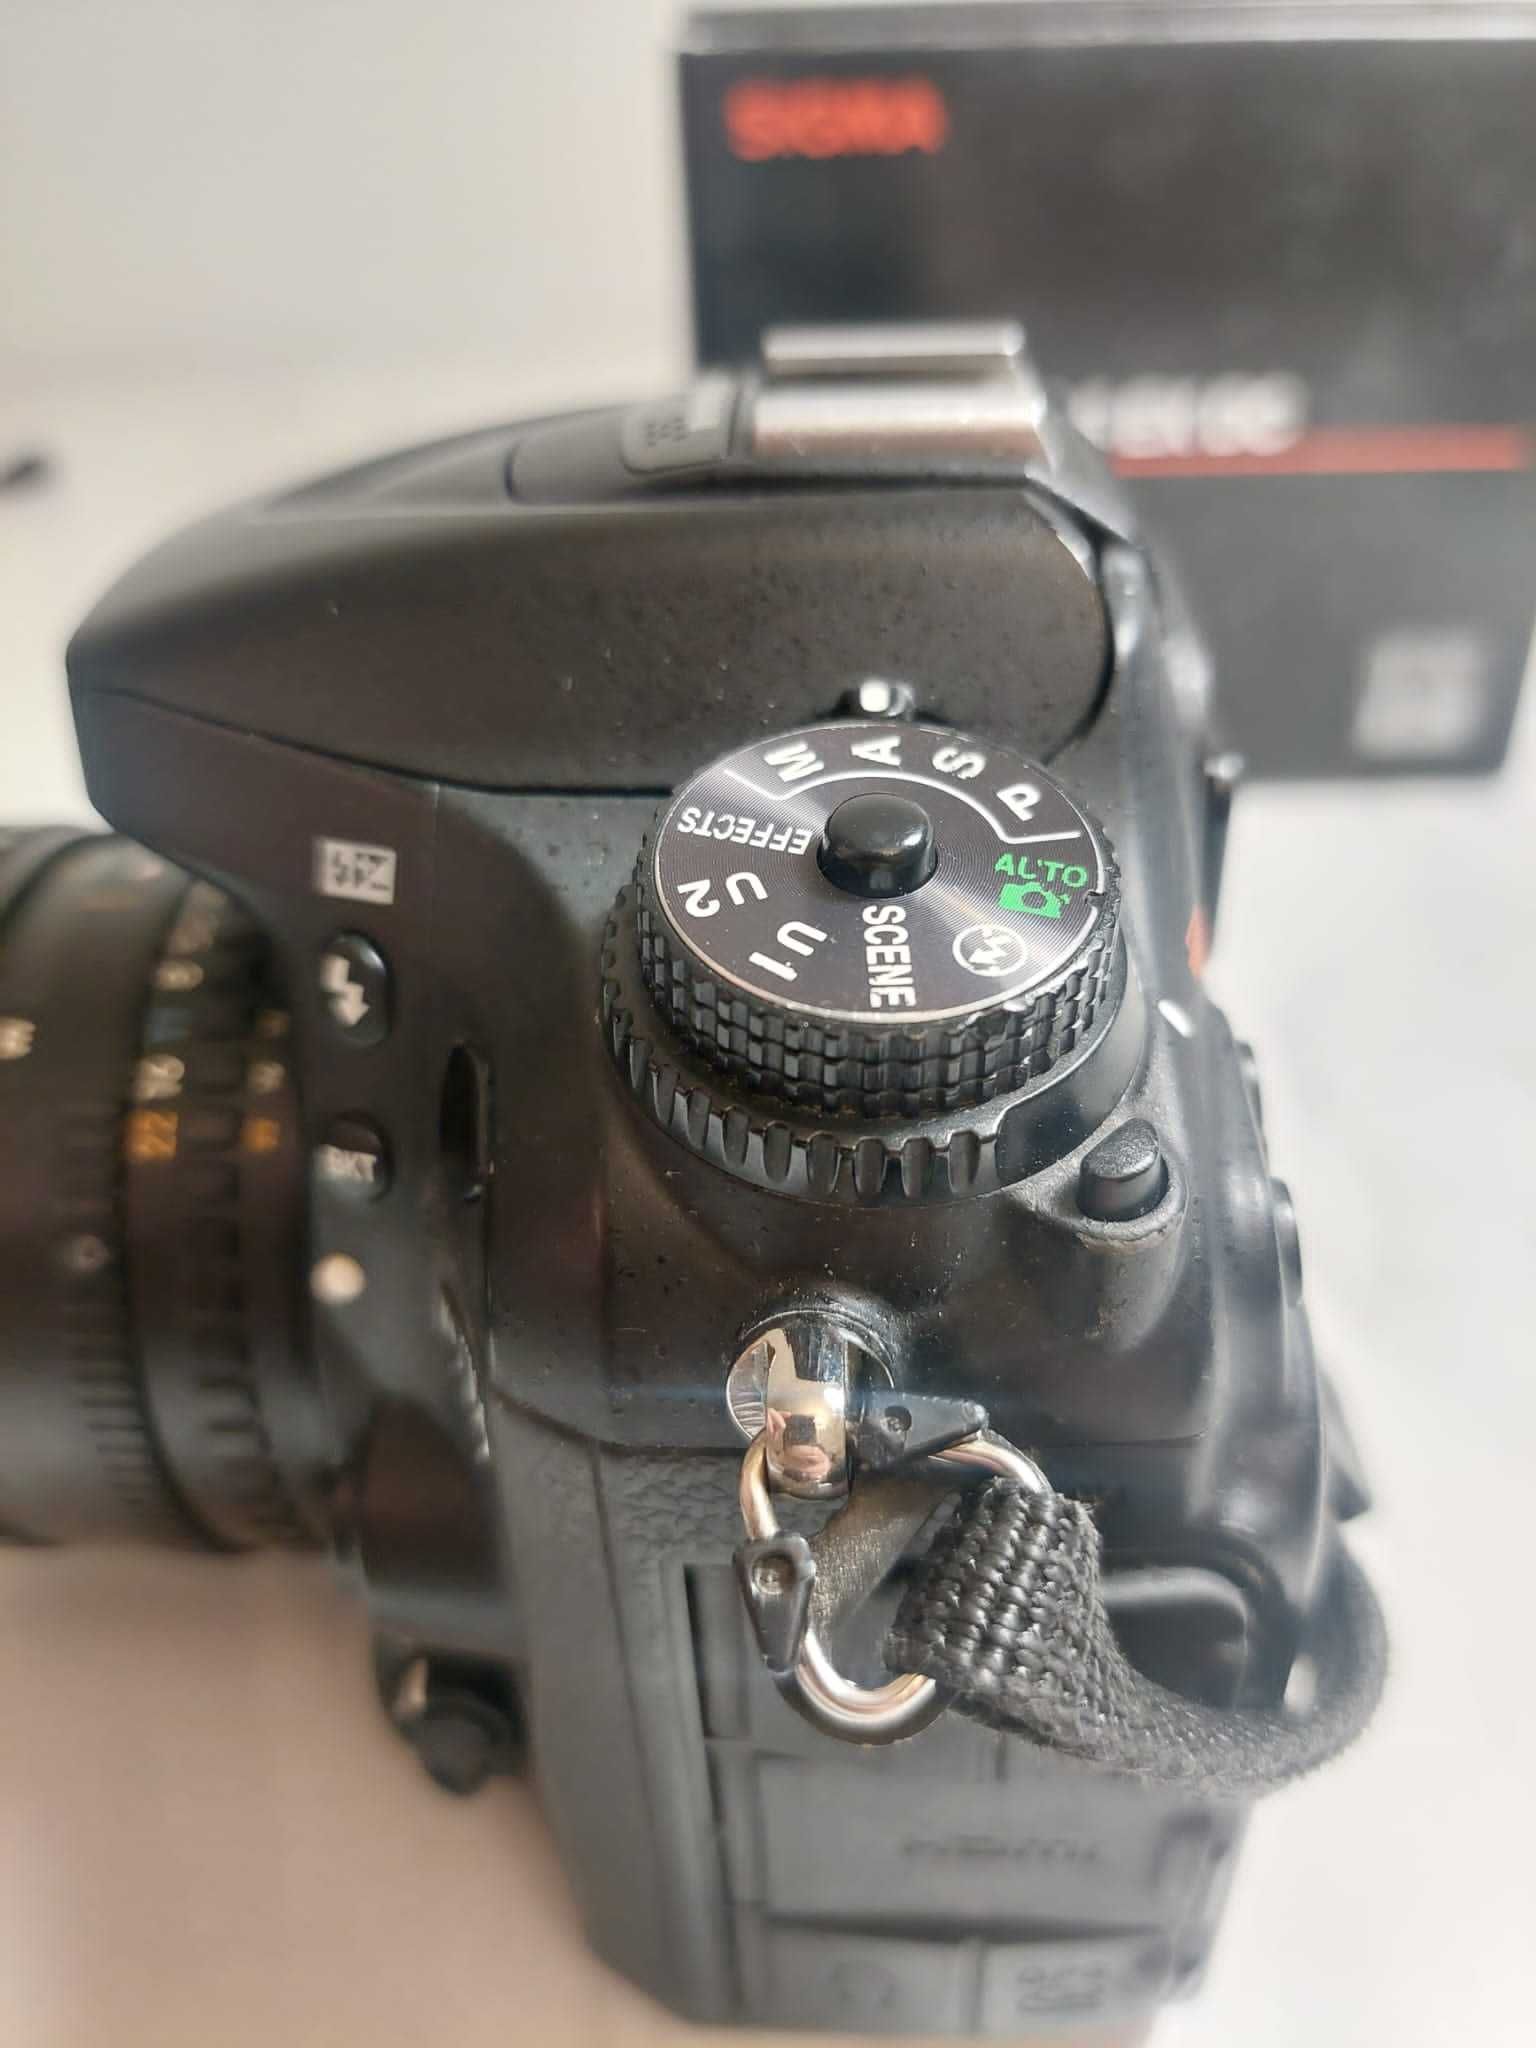 Nikon D7100 body z akcesoriami